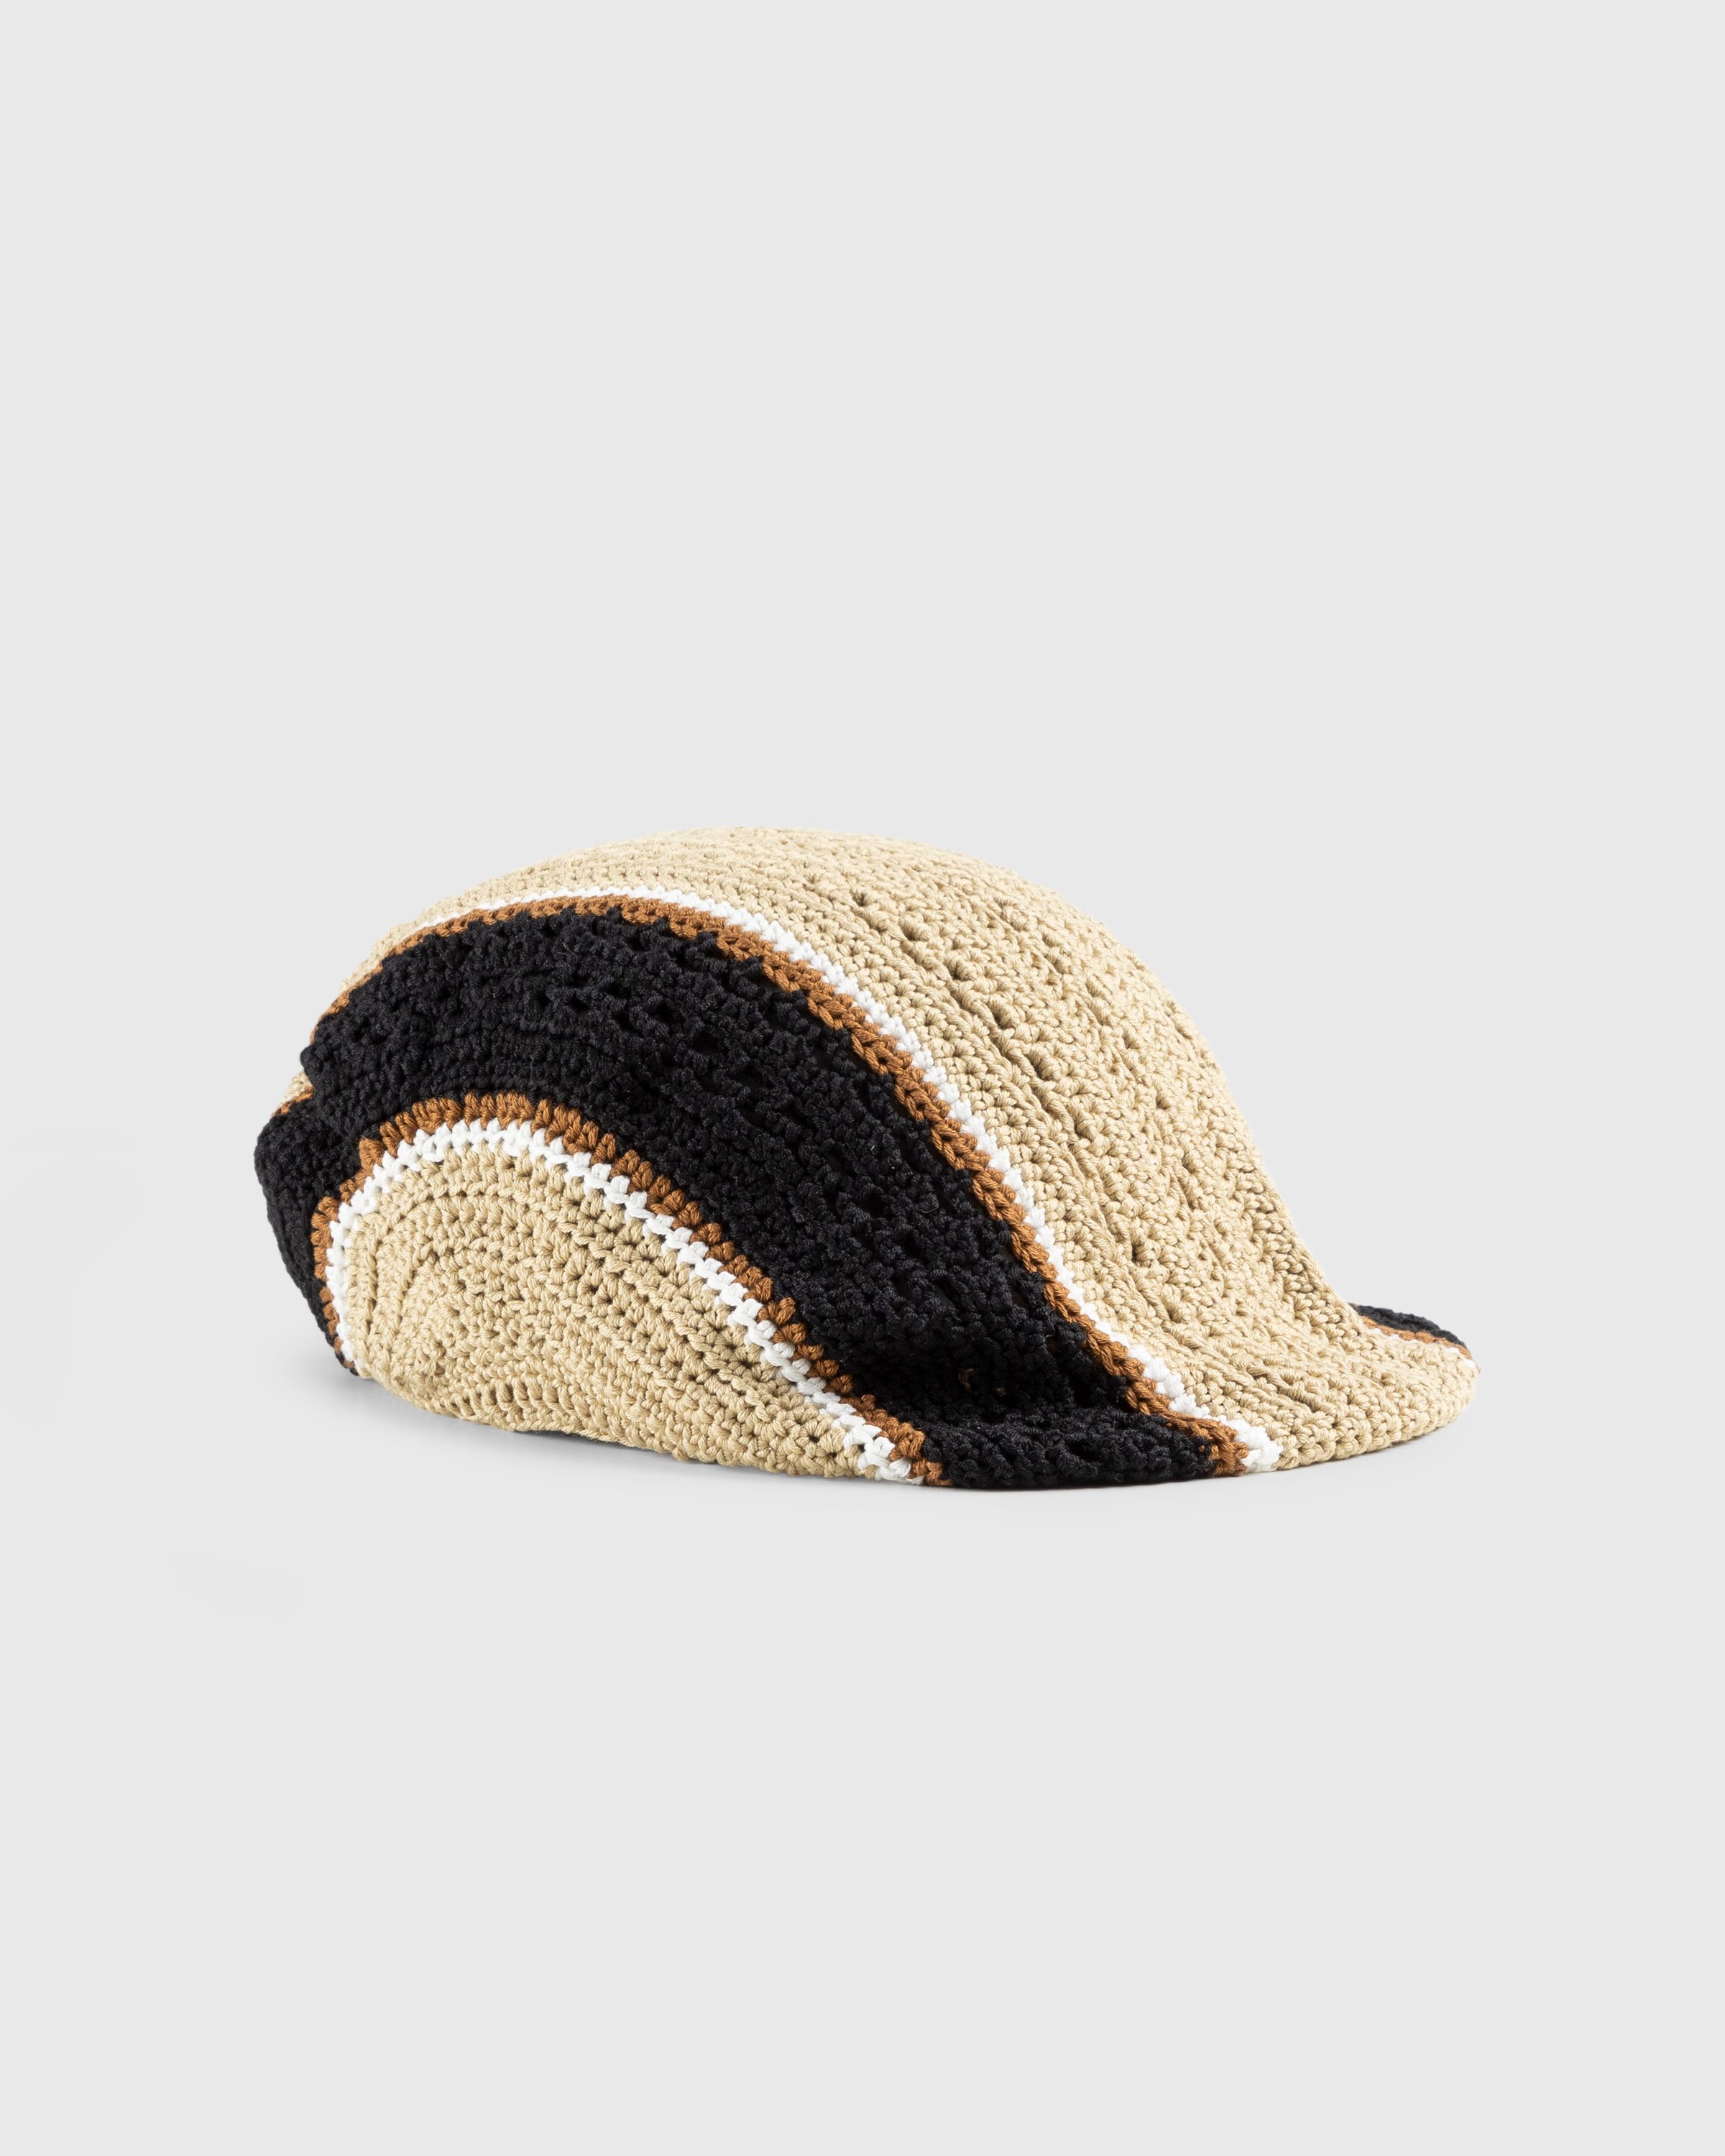 SSU - Crochet Flat Hat Beige/Black - Accessories - Black - Image 1